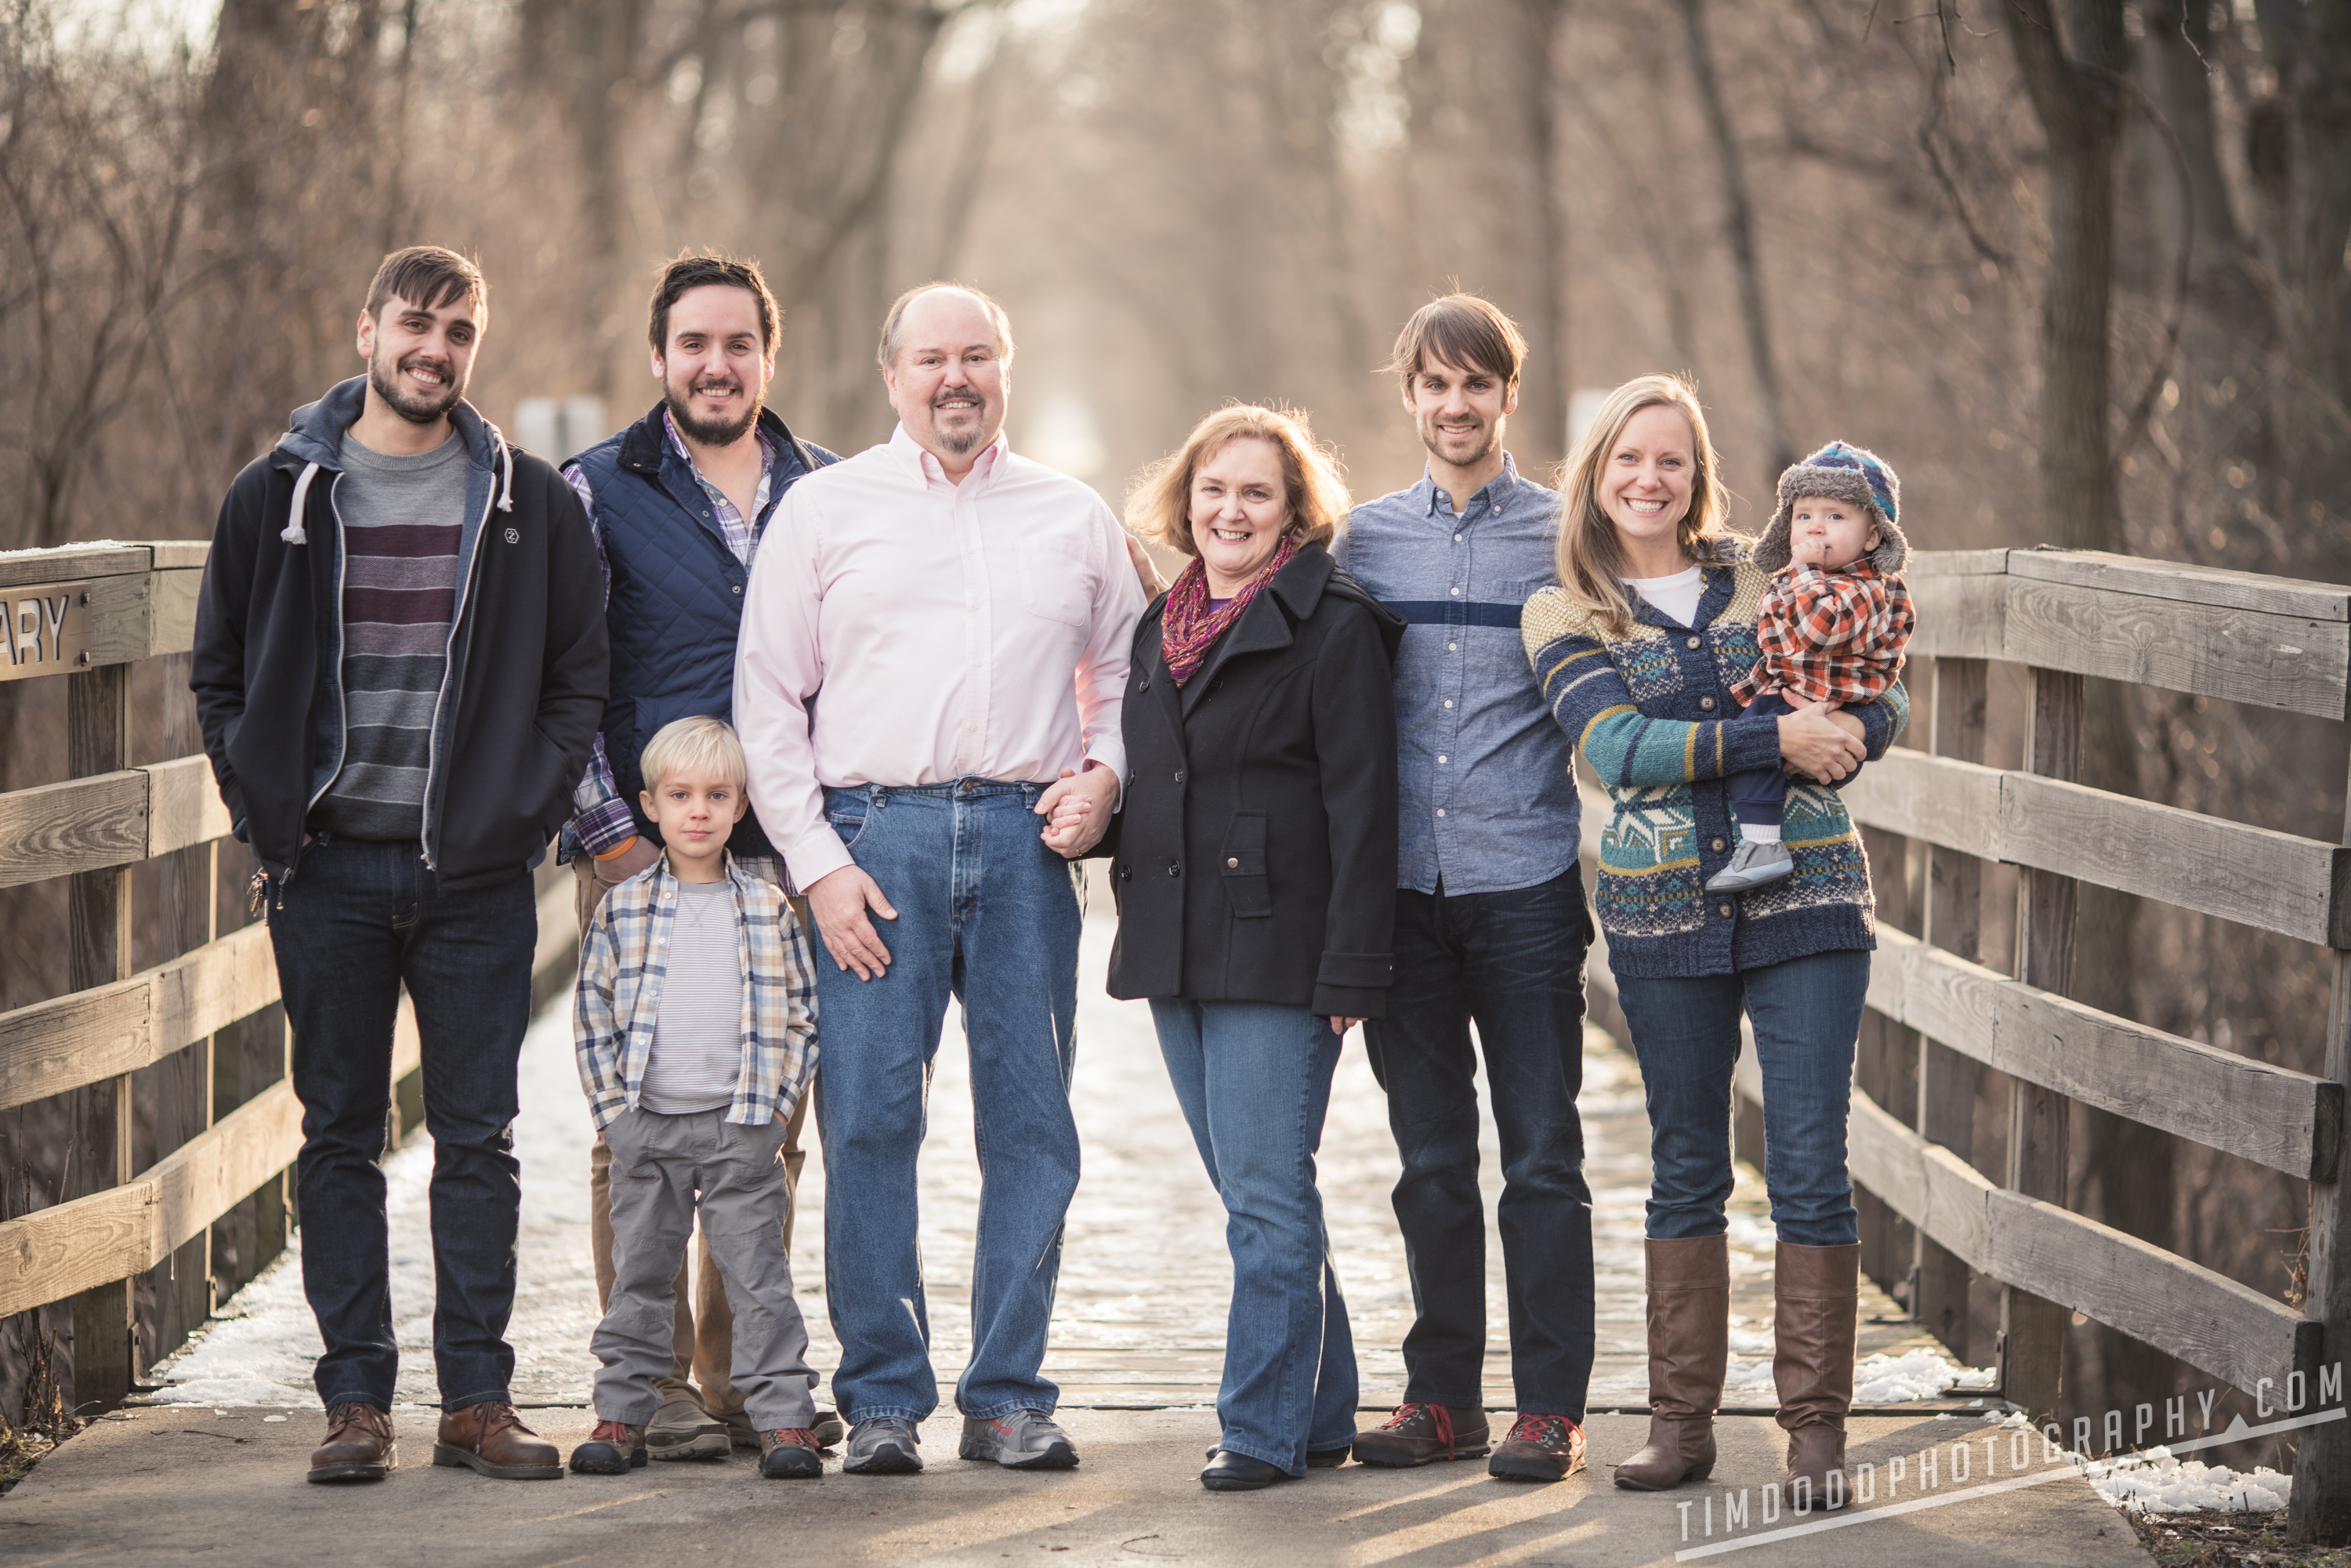 Cedar Falls Family Photo professional photography digital rights free best Waterloo Iowa Tim Dodd Photography